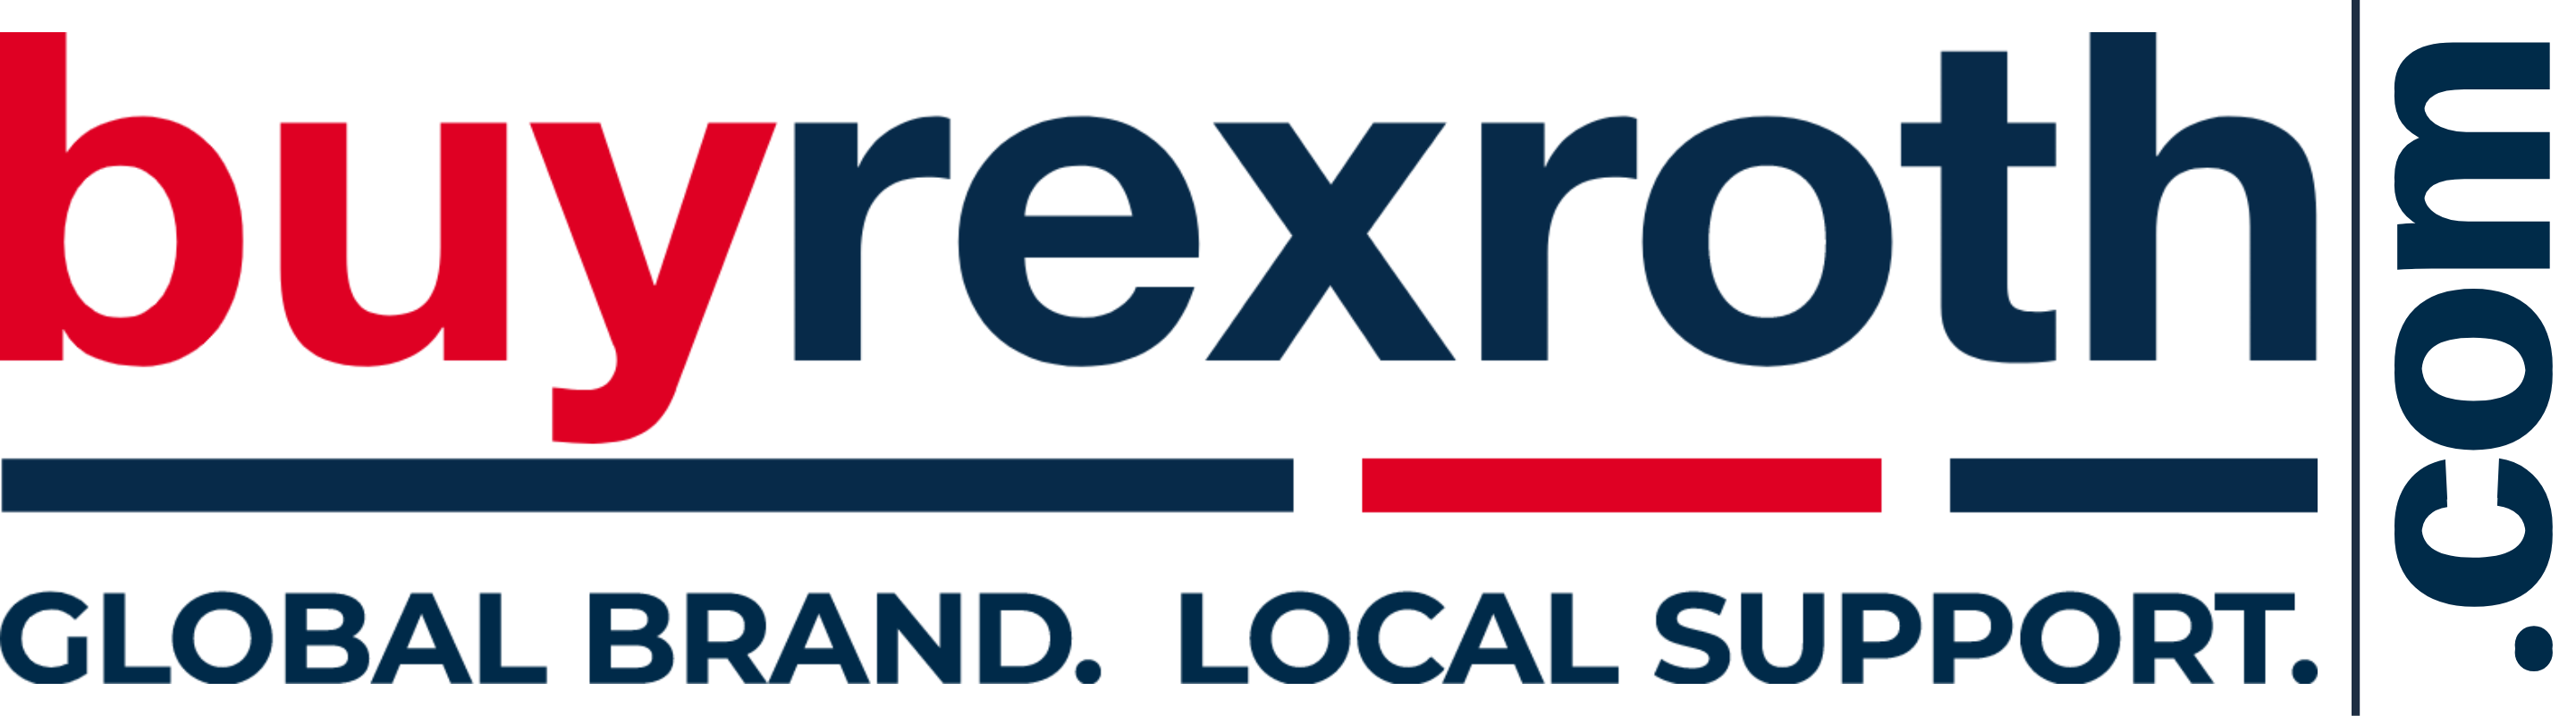 buyrexroth logo